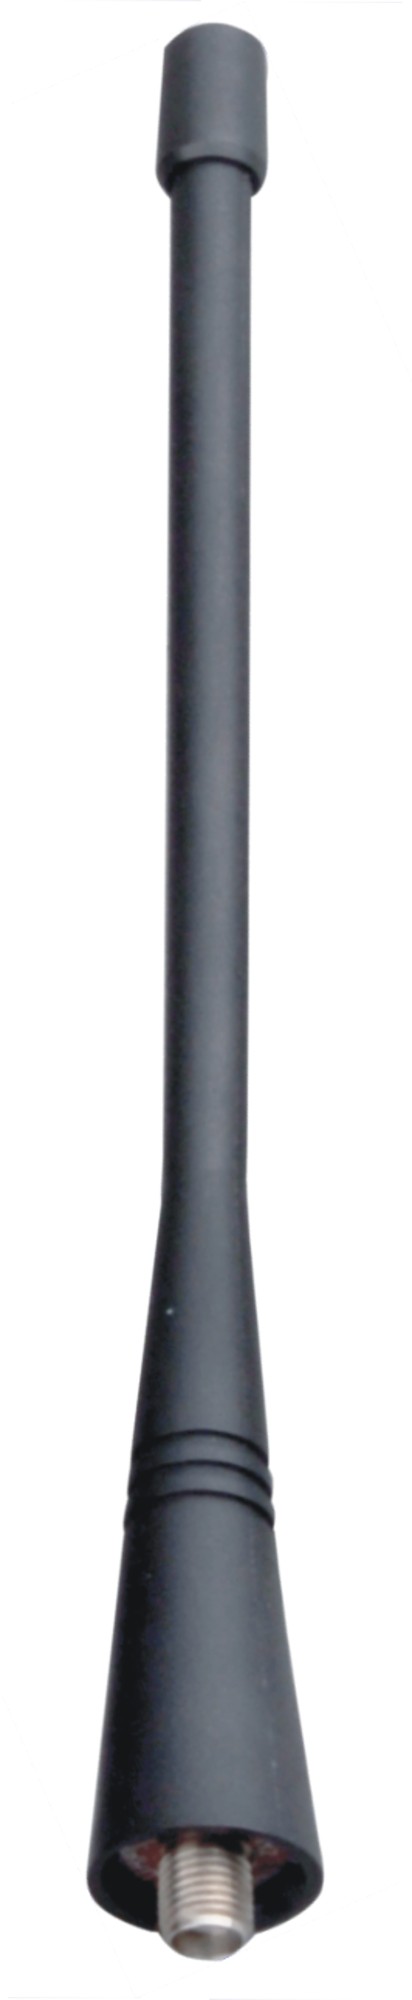 UHF antenna 16 cm, SMA female, 450-520 MHz